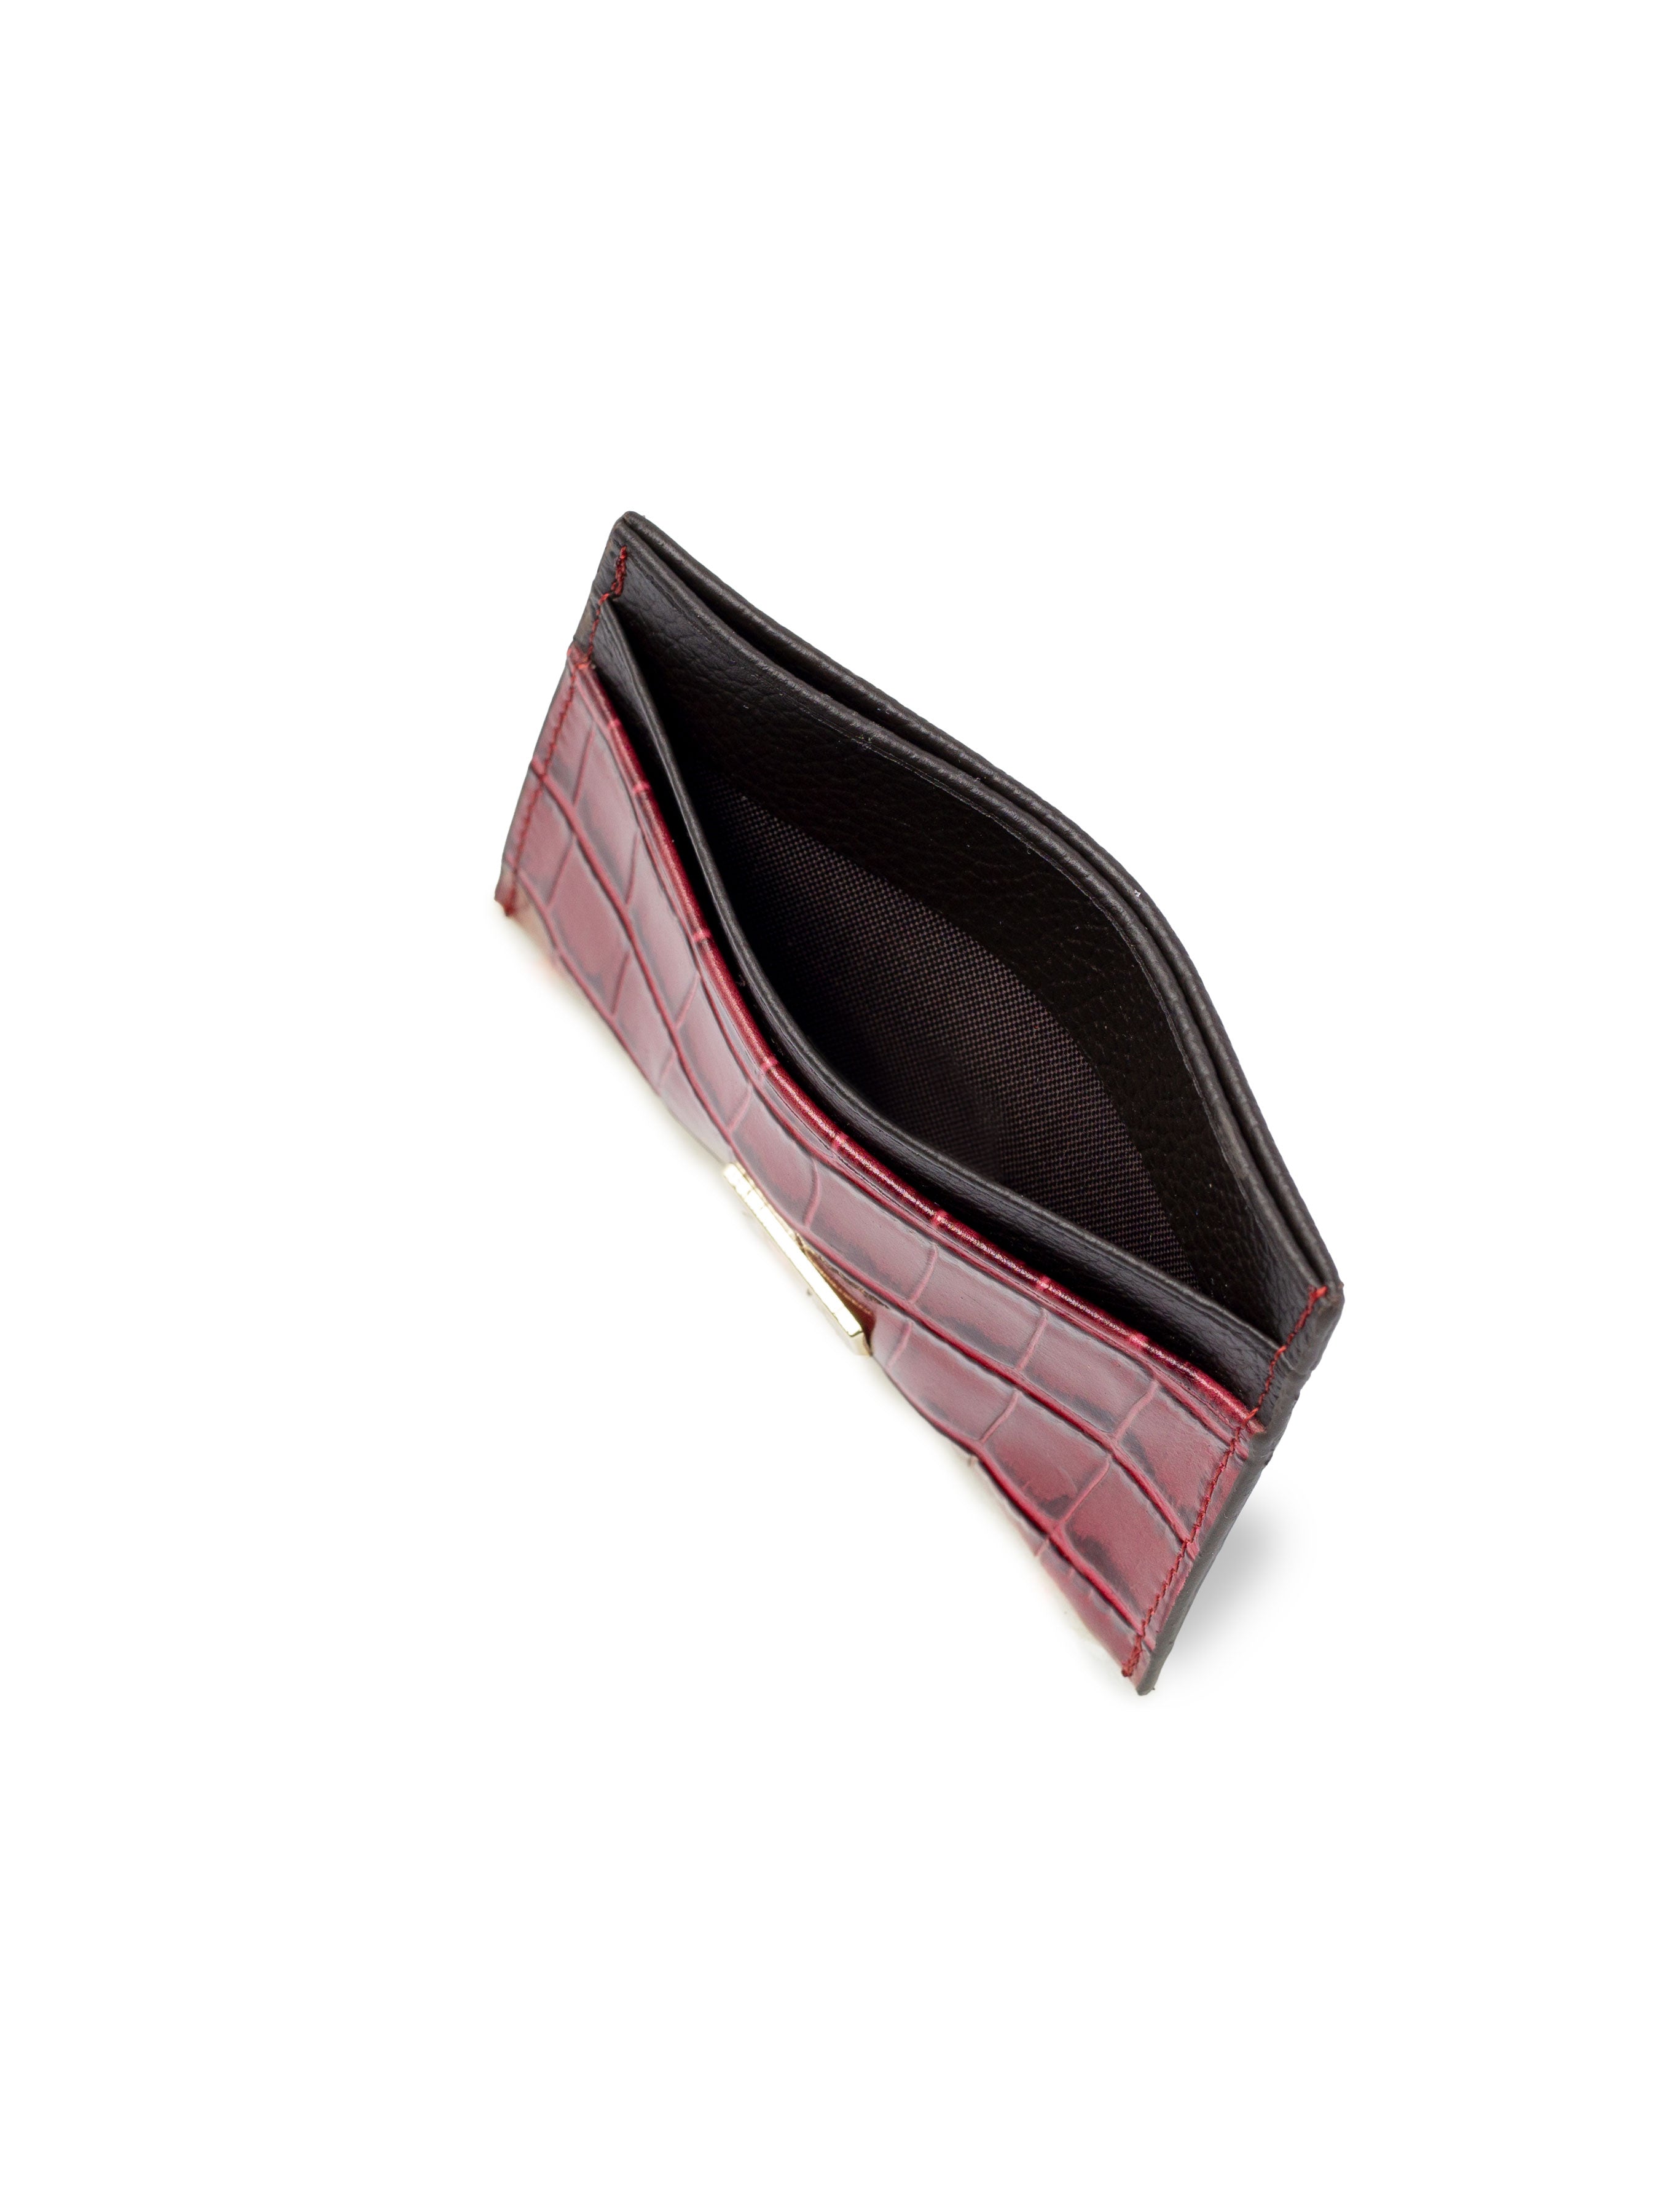 Card Holder - Red Burgundy Polished Croco Leather - Zeve Shoes